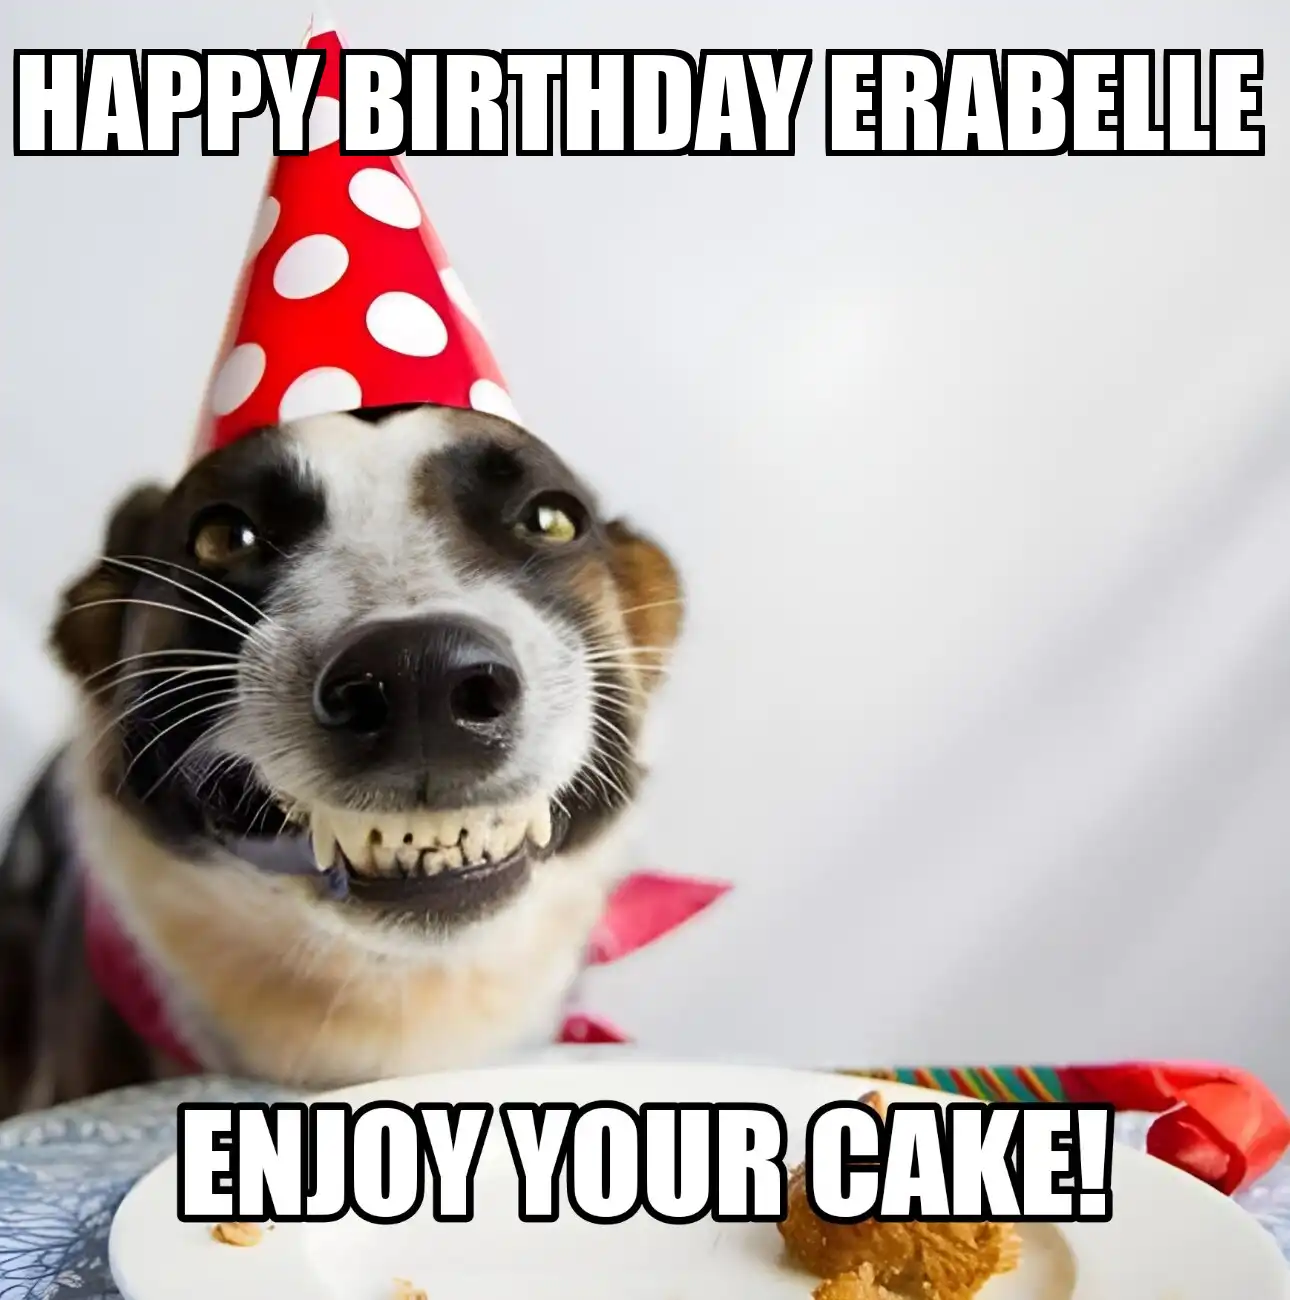 Happy Birthday Erabelle Enjoy Your Cake Dog Meme